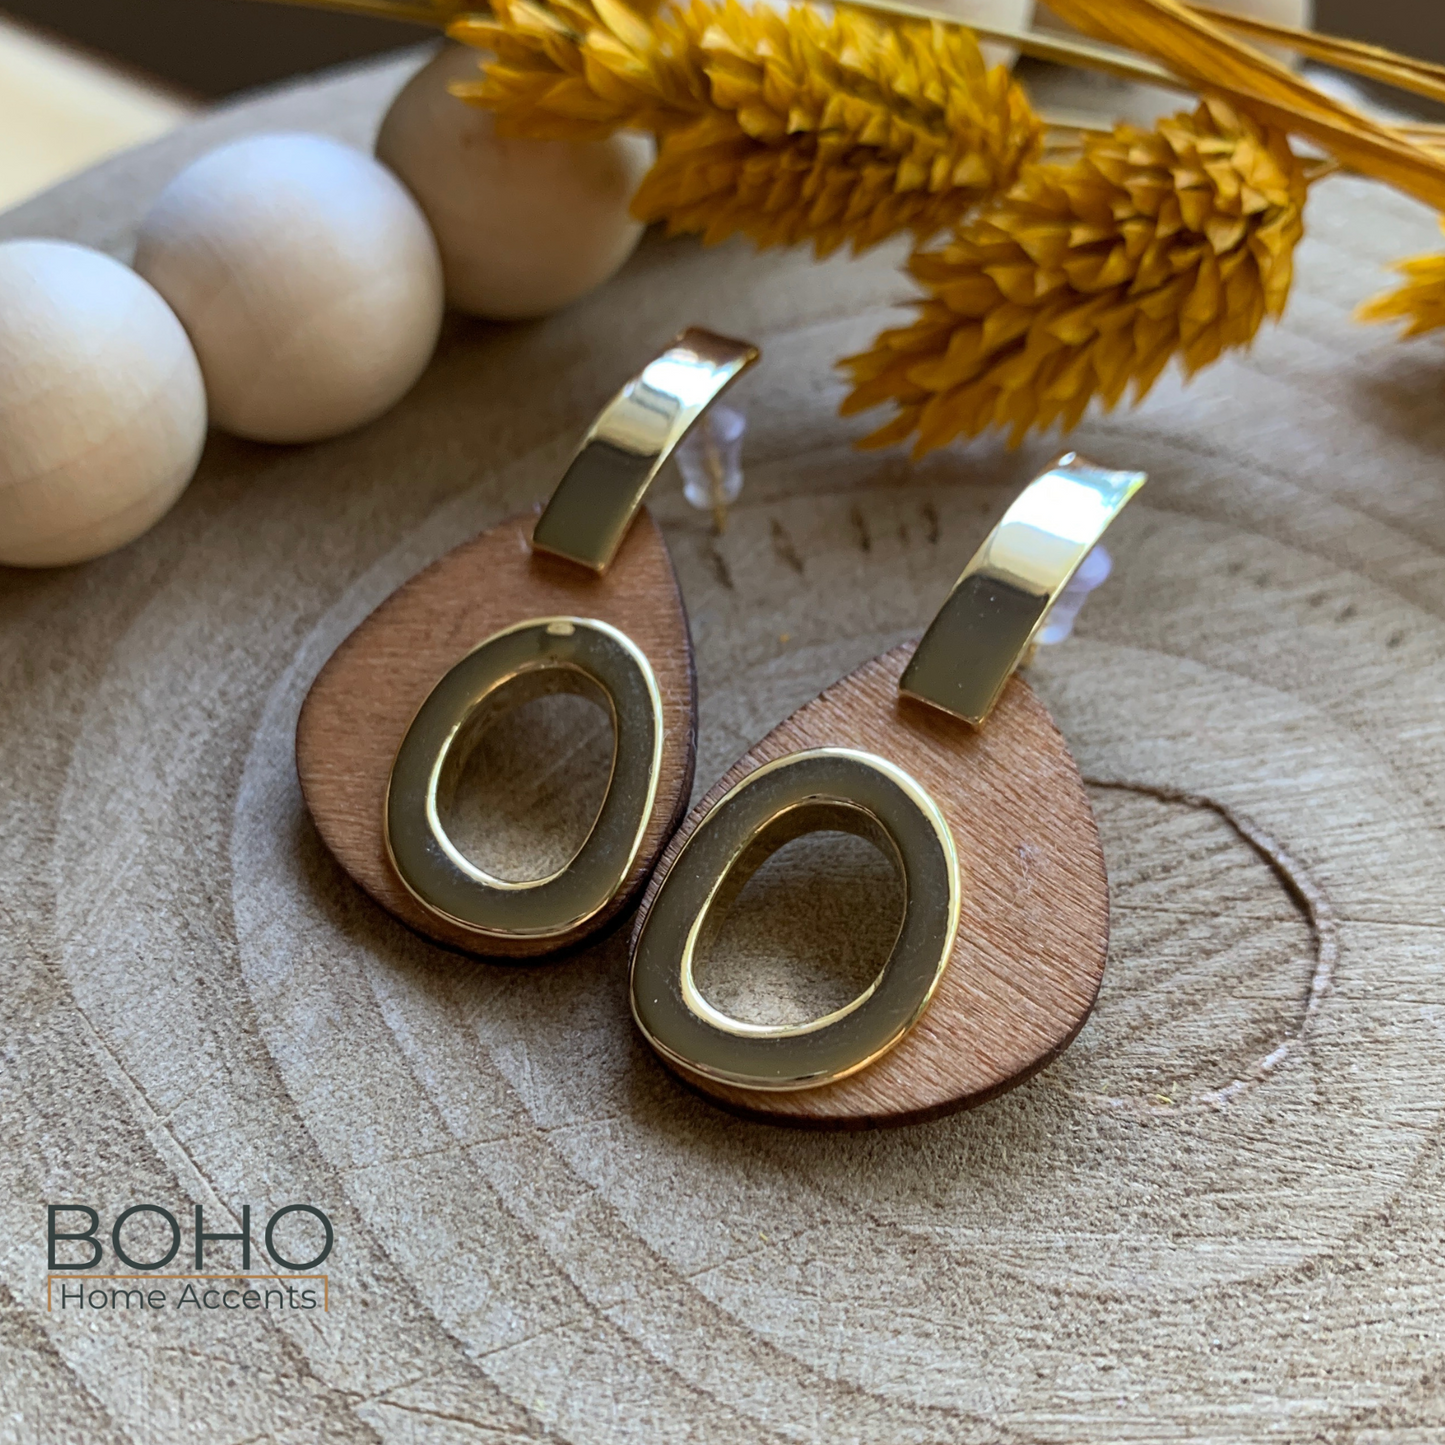 SALE! - Joyful Gold Accented Wood Earrings - Handcraft wood earrings | Boho Home Accents